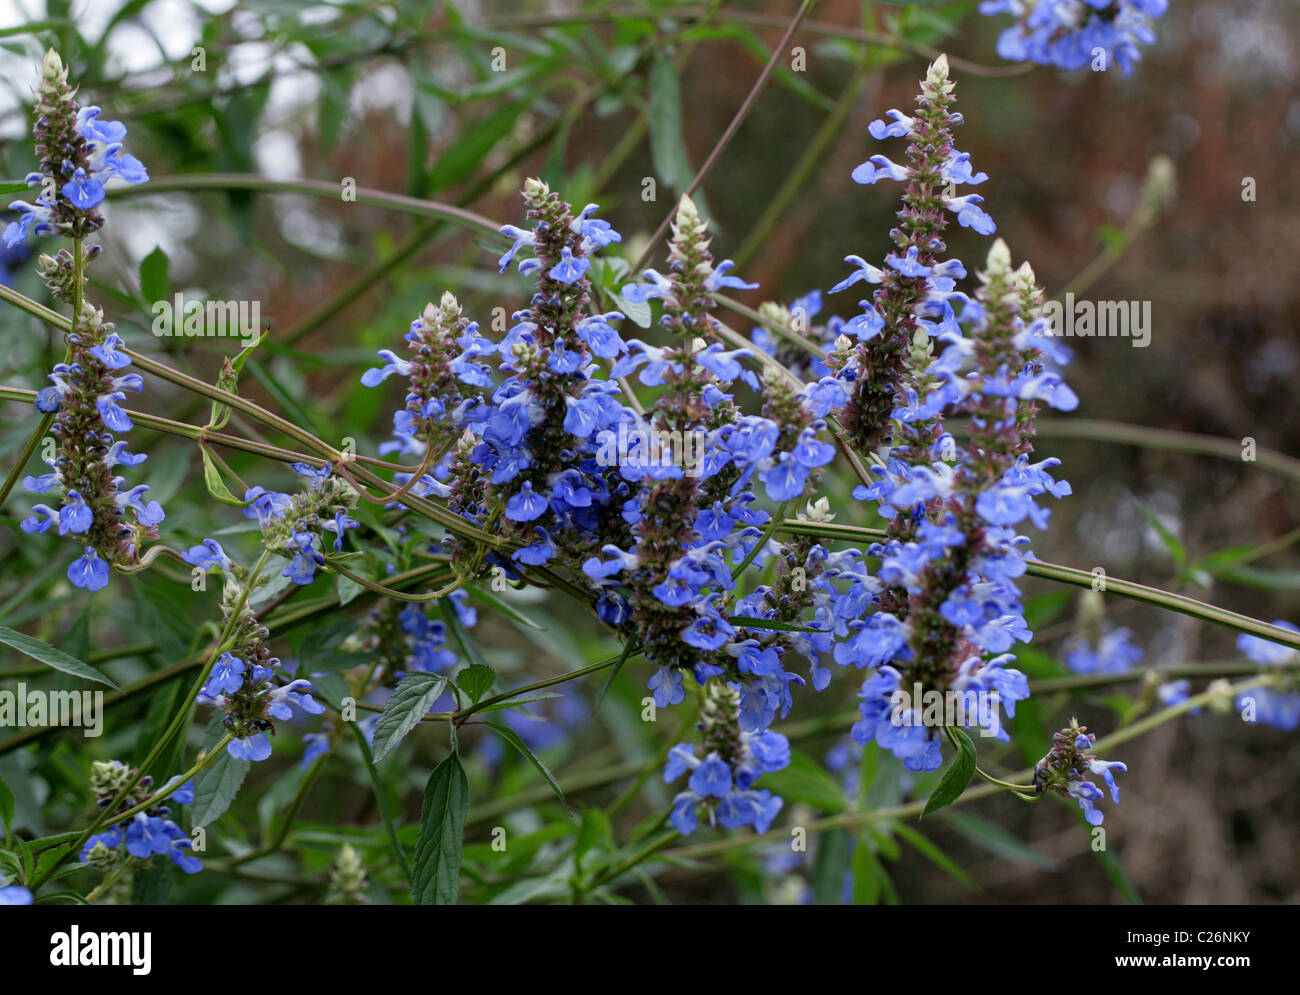 Bog Sage, Salvia uliginosa, Lamiaceae. Brazil, Uruguay and Argentina, South America. Stock Photo